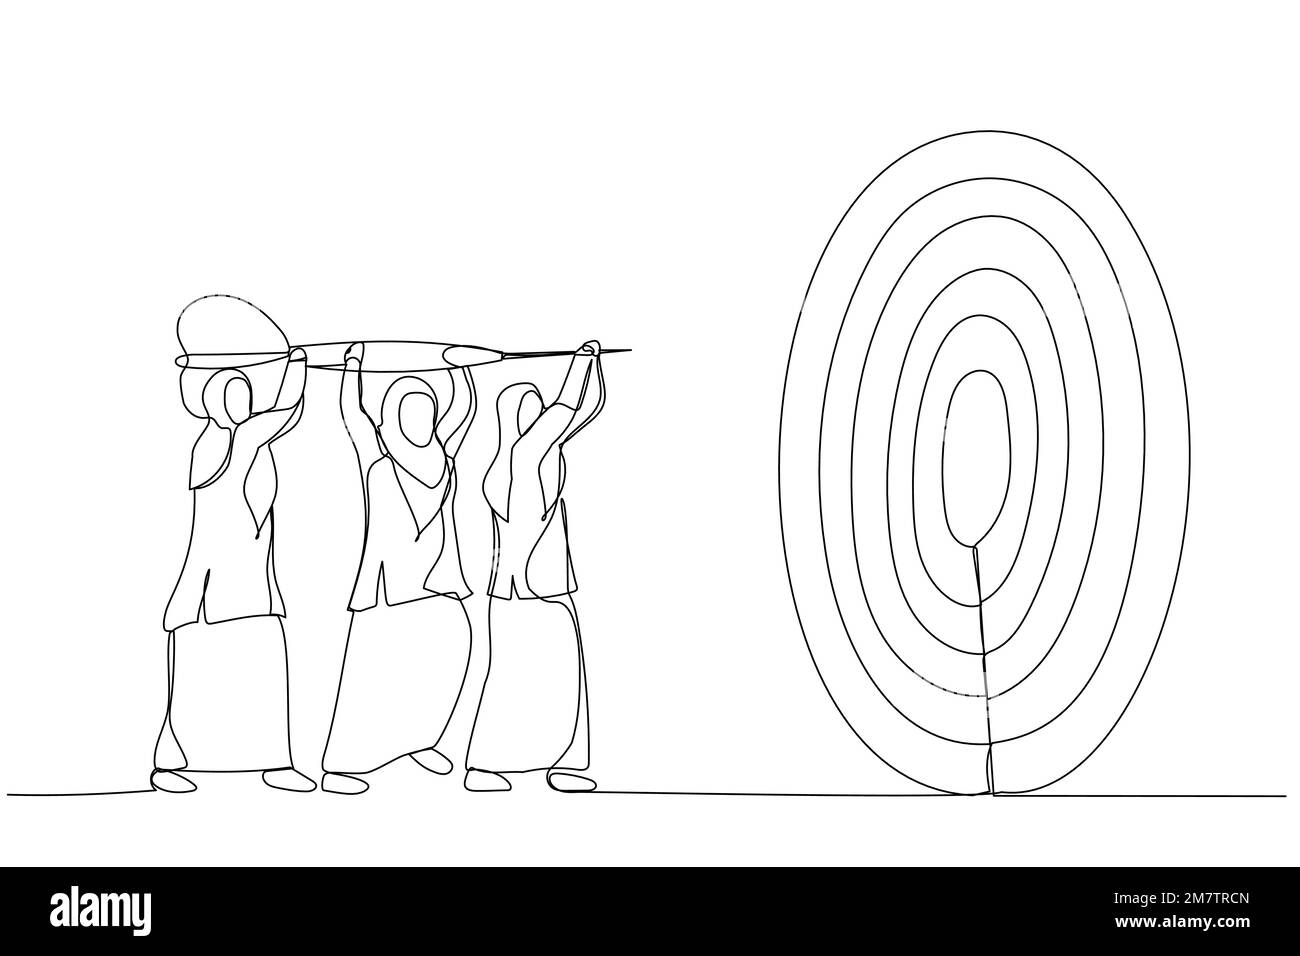 Illustration of businesswoman help holding dart aiming on bullseye target. Metaphor for team goal, teamwork collaboration. Single continuous line art Stock Vector